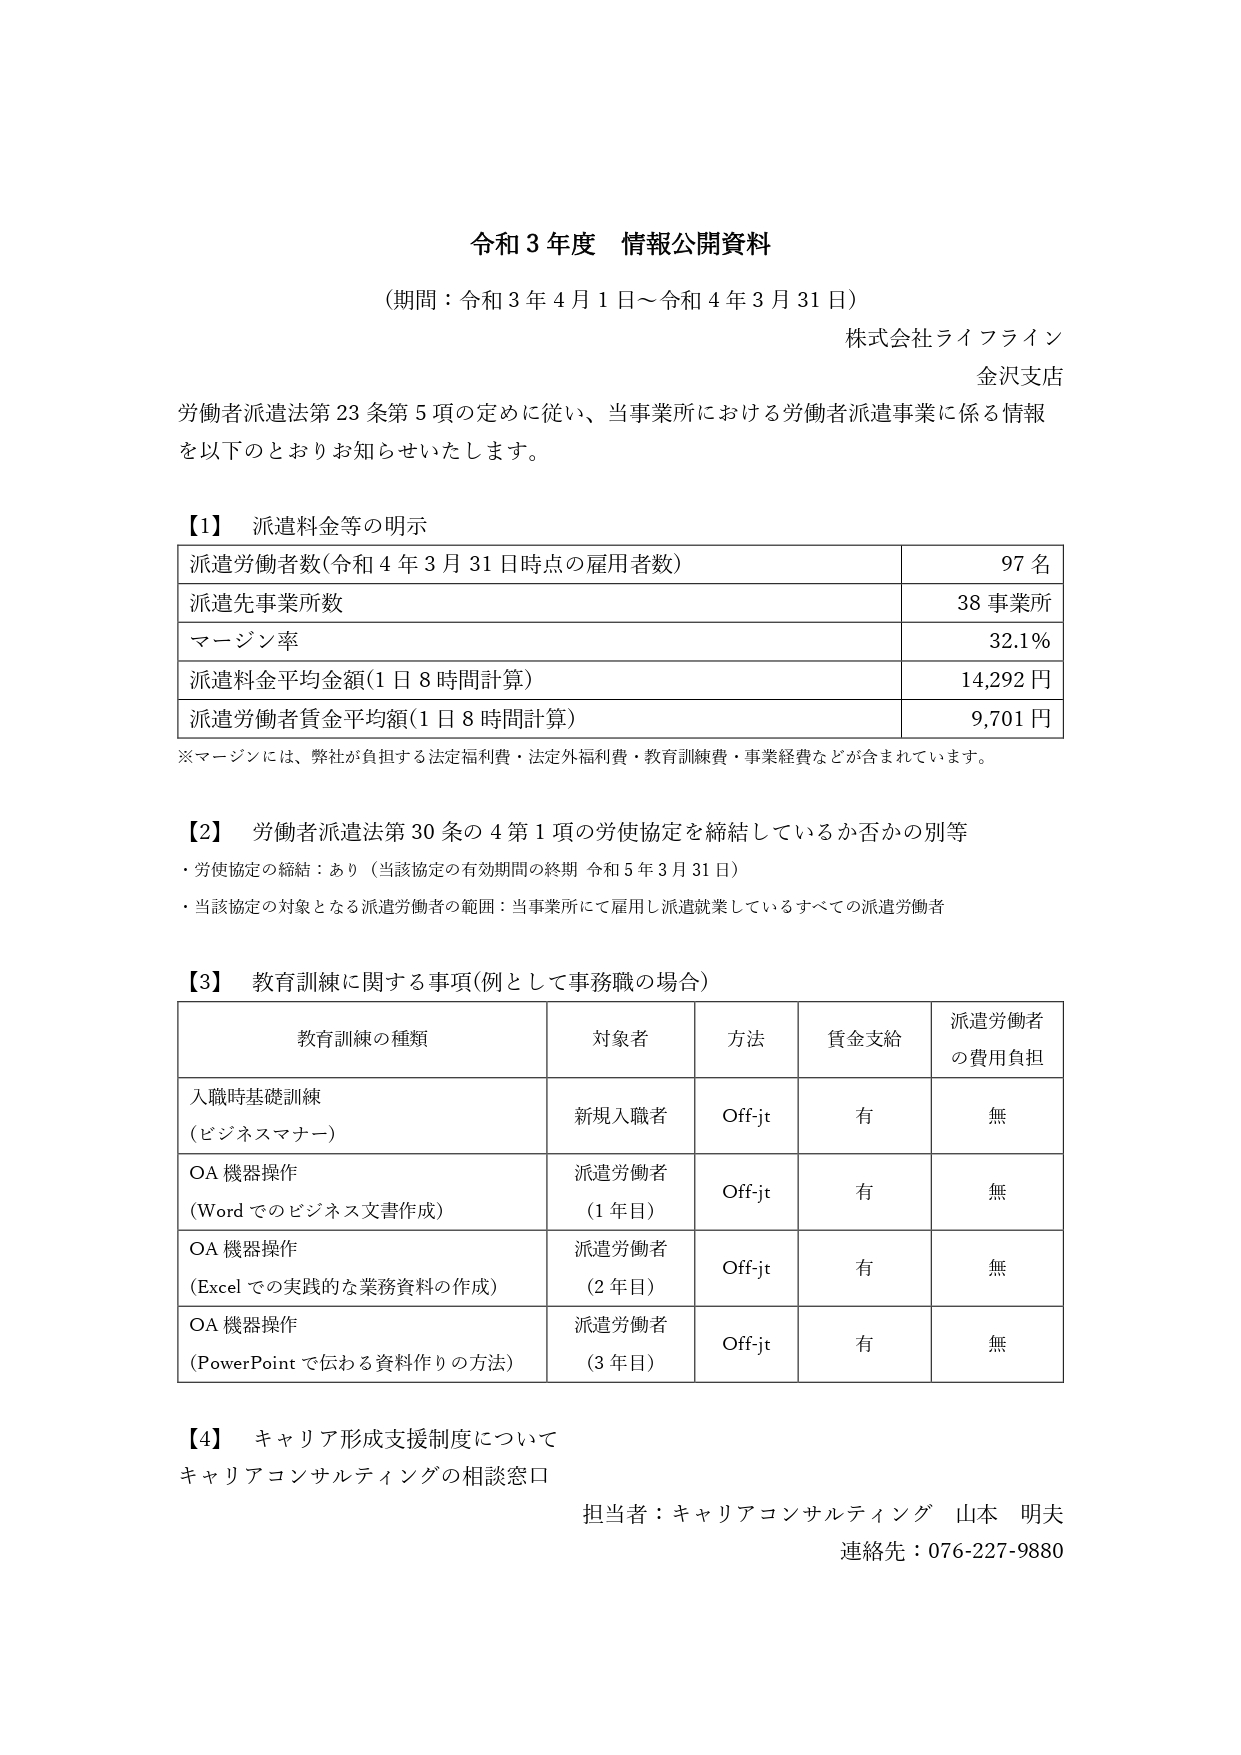 HP掲載用マージン率等_金沢支店_page-0001 (1)